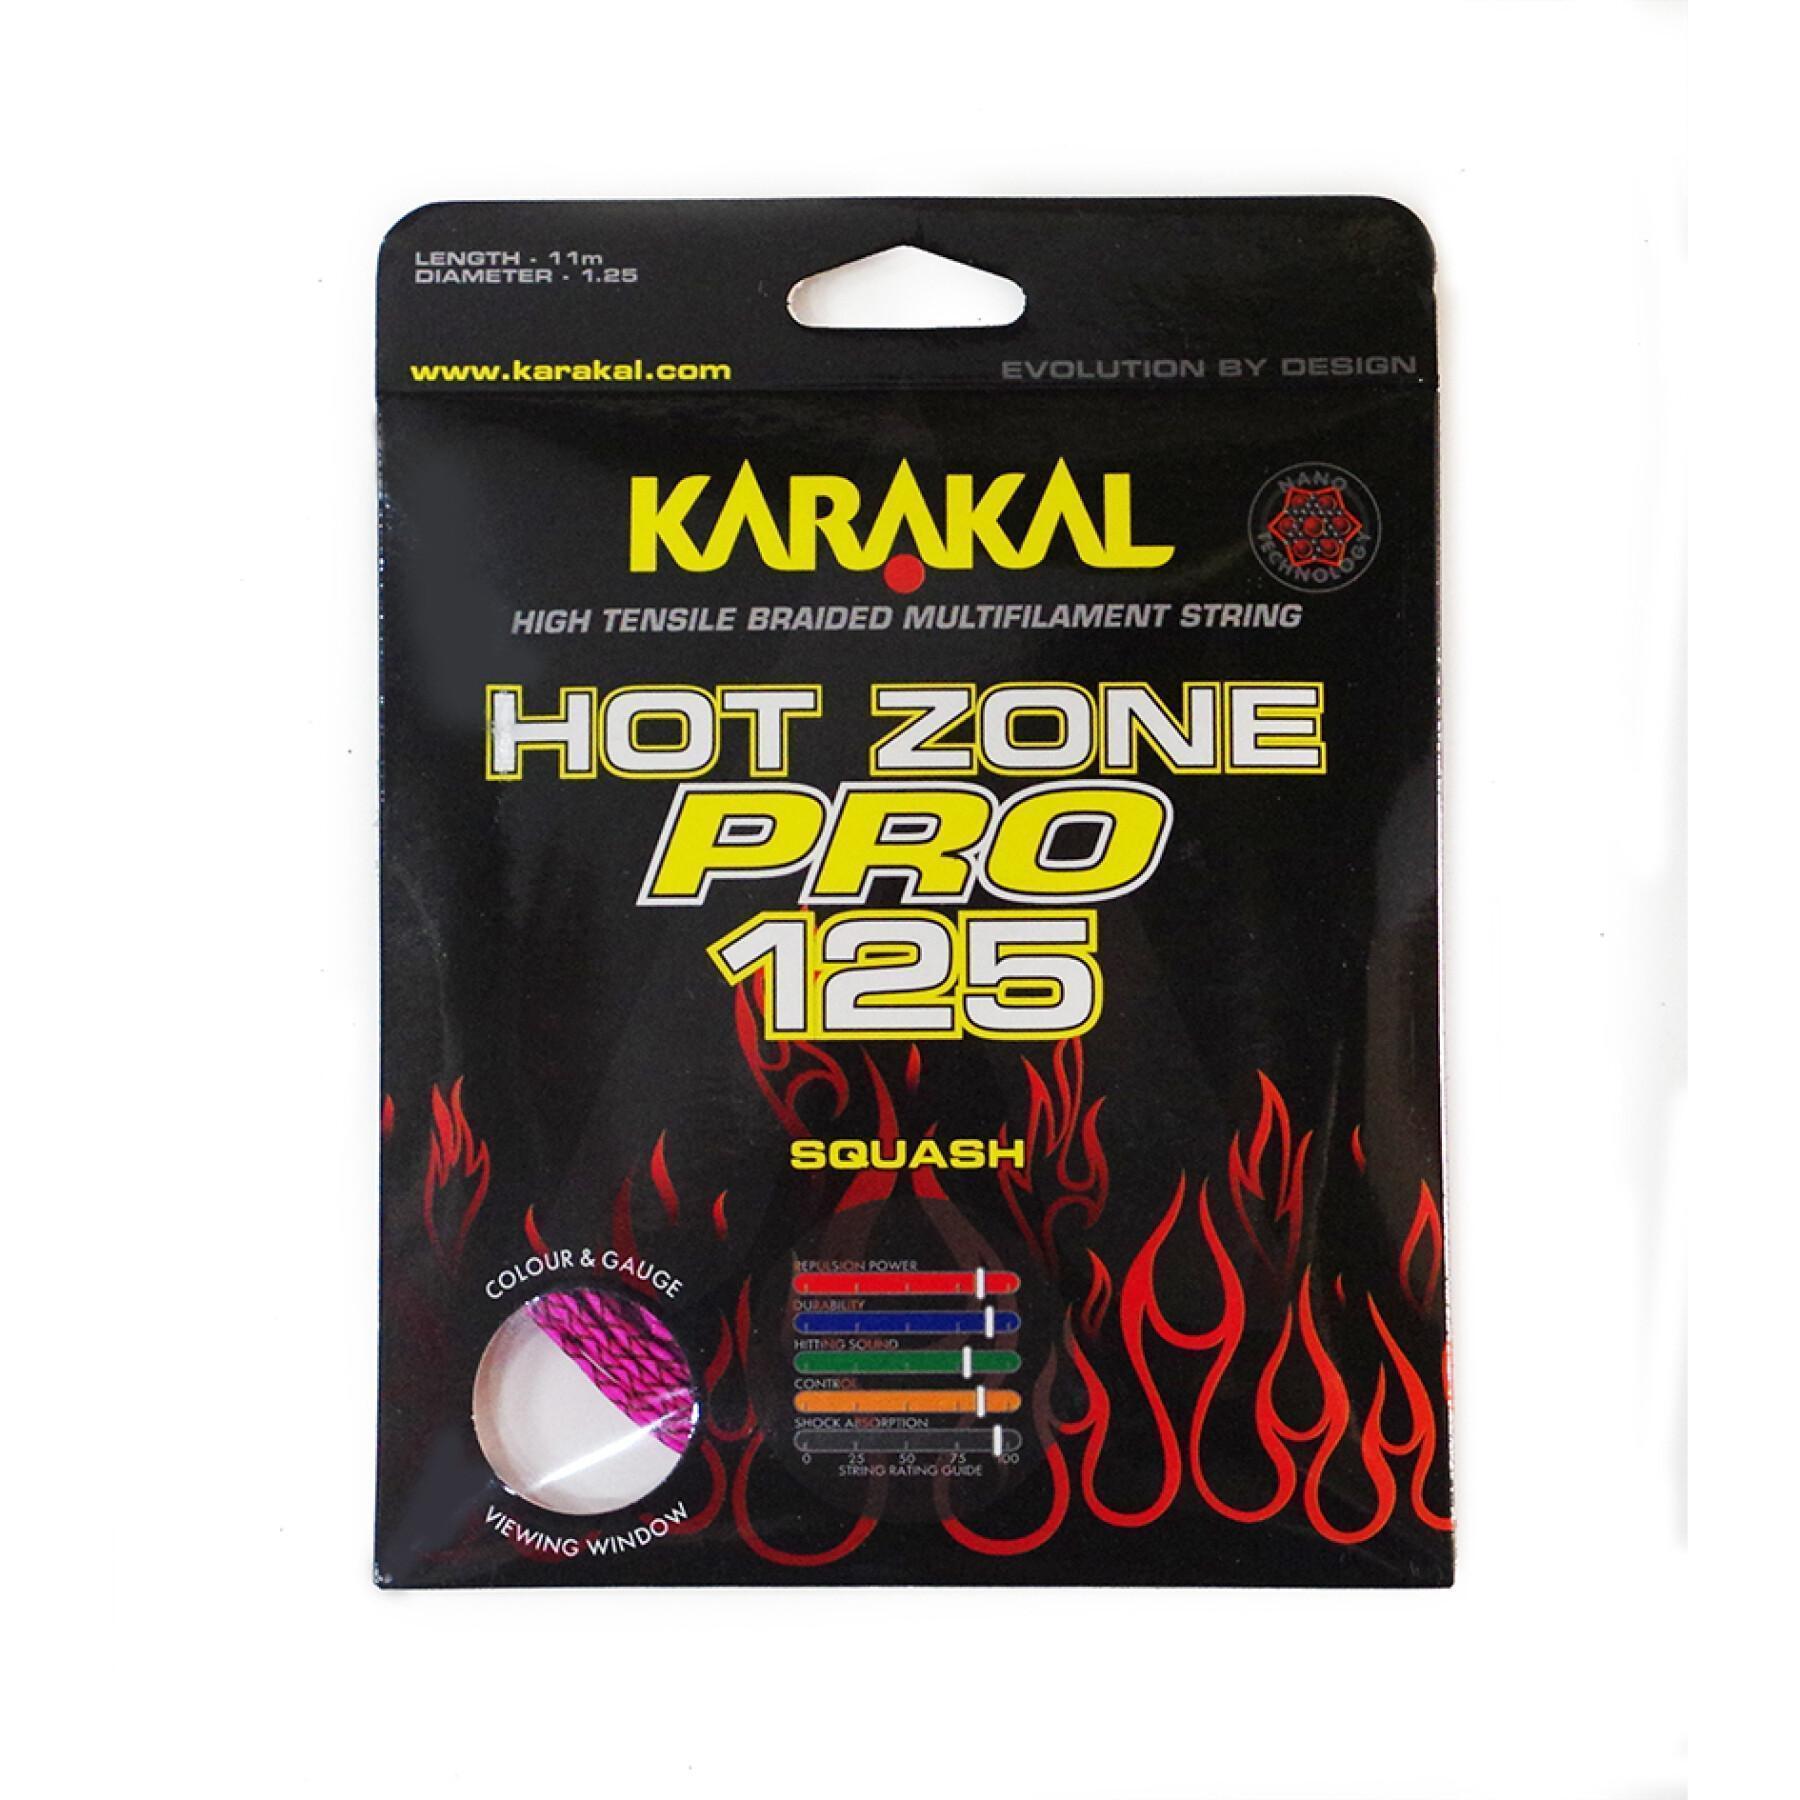 Corde squash Karakal Hot Zone Pro 125